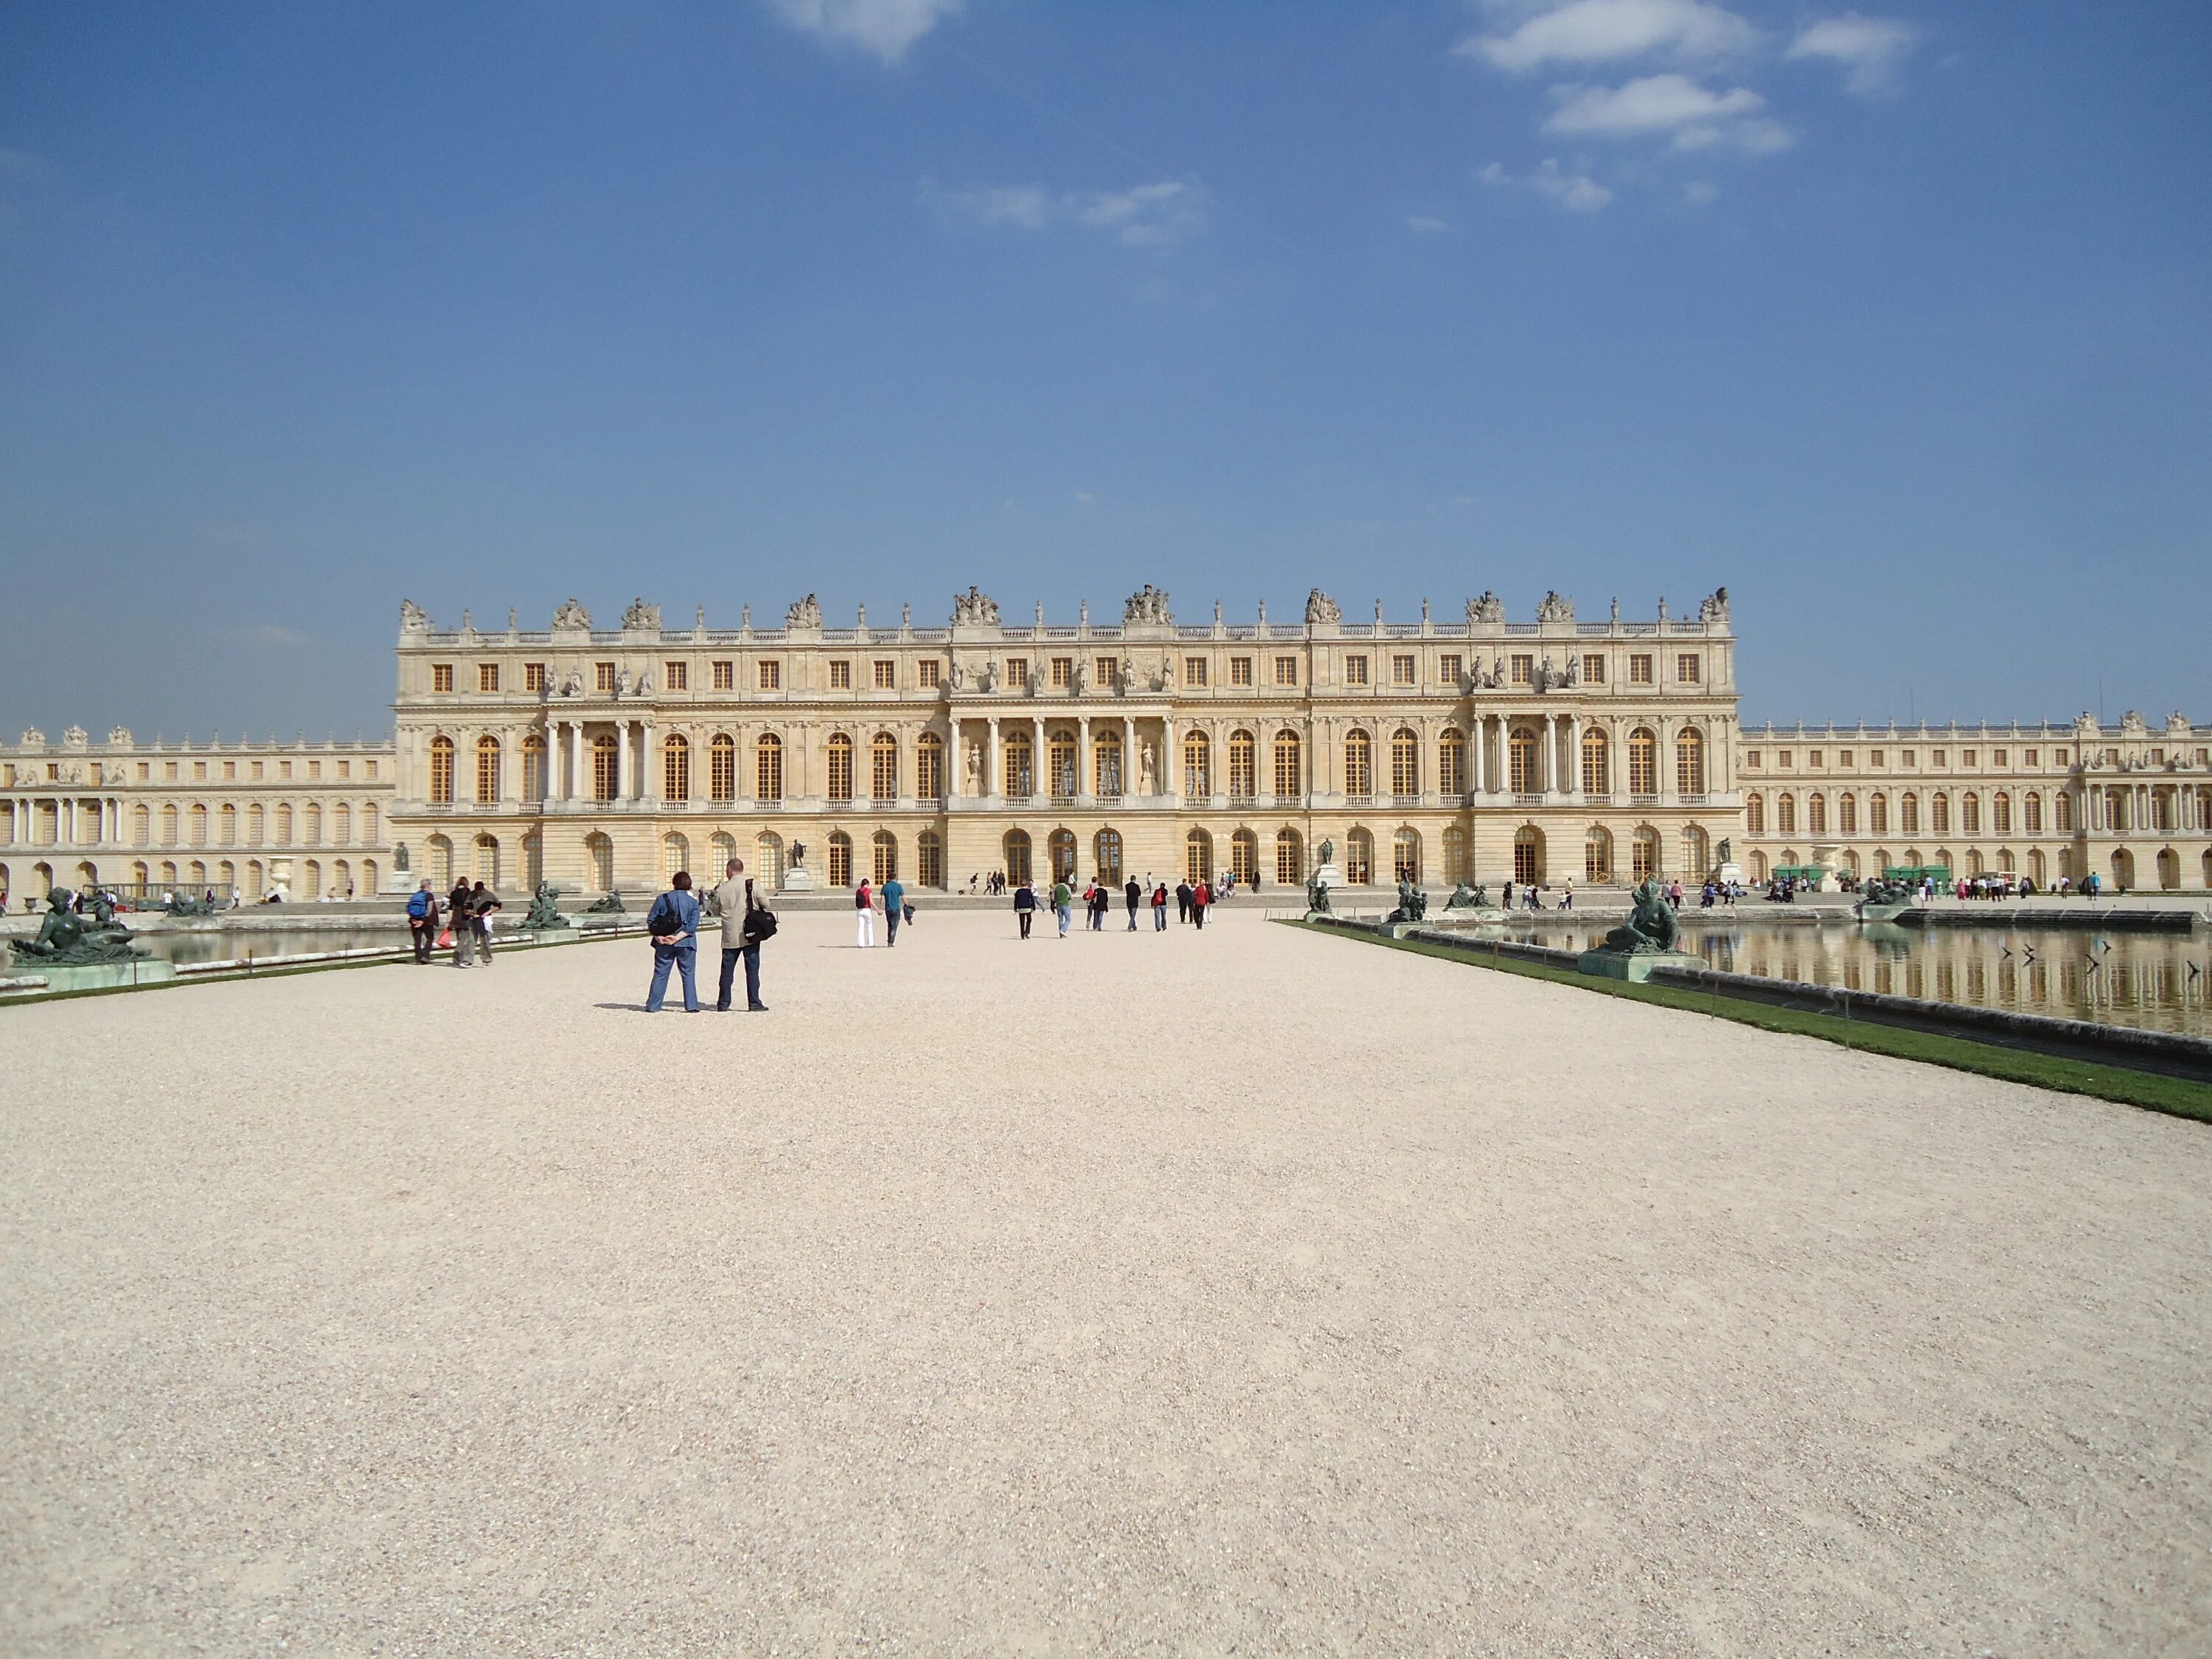 Версальский дворец, Версаль дворец Версаля. Версальский дворец Версаль внутри. Версальский дворец охотничий замок. Площадь Версальского дворца. Про версаль